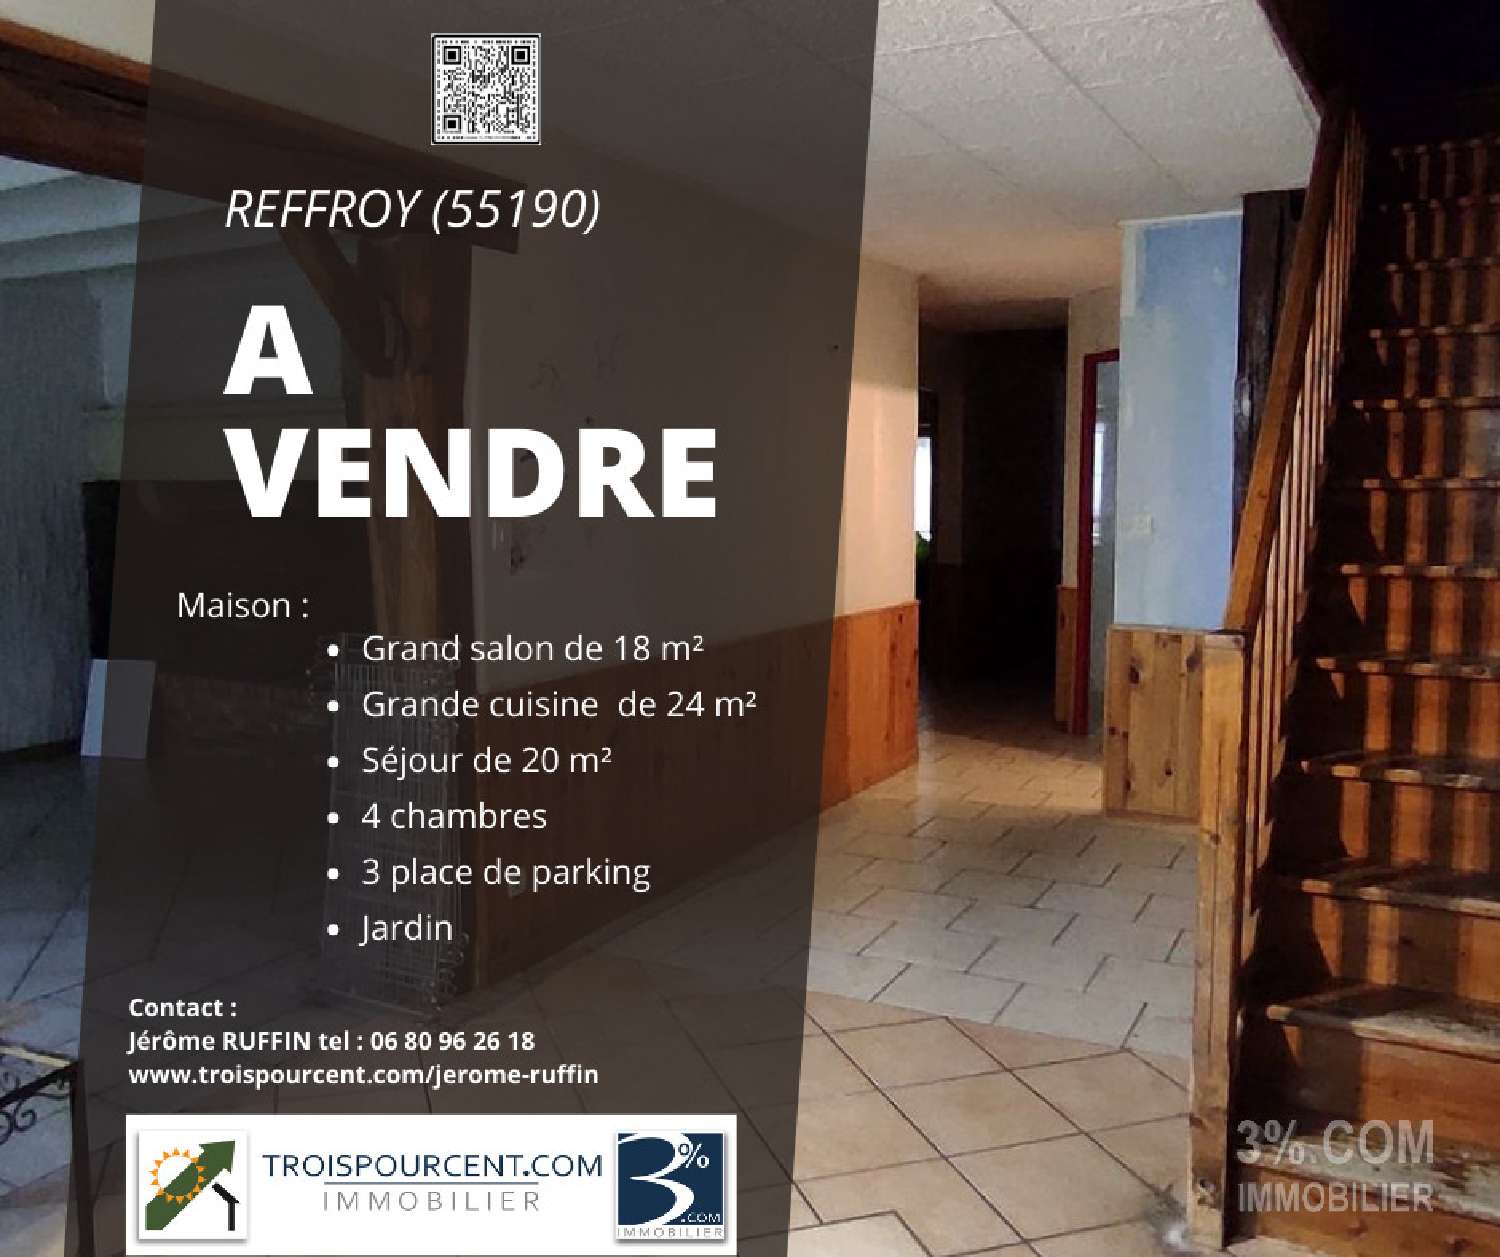  for sale village house Reffroy Meuse 1